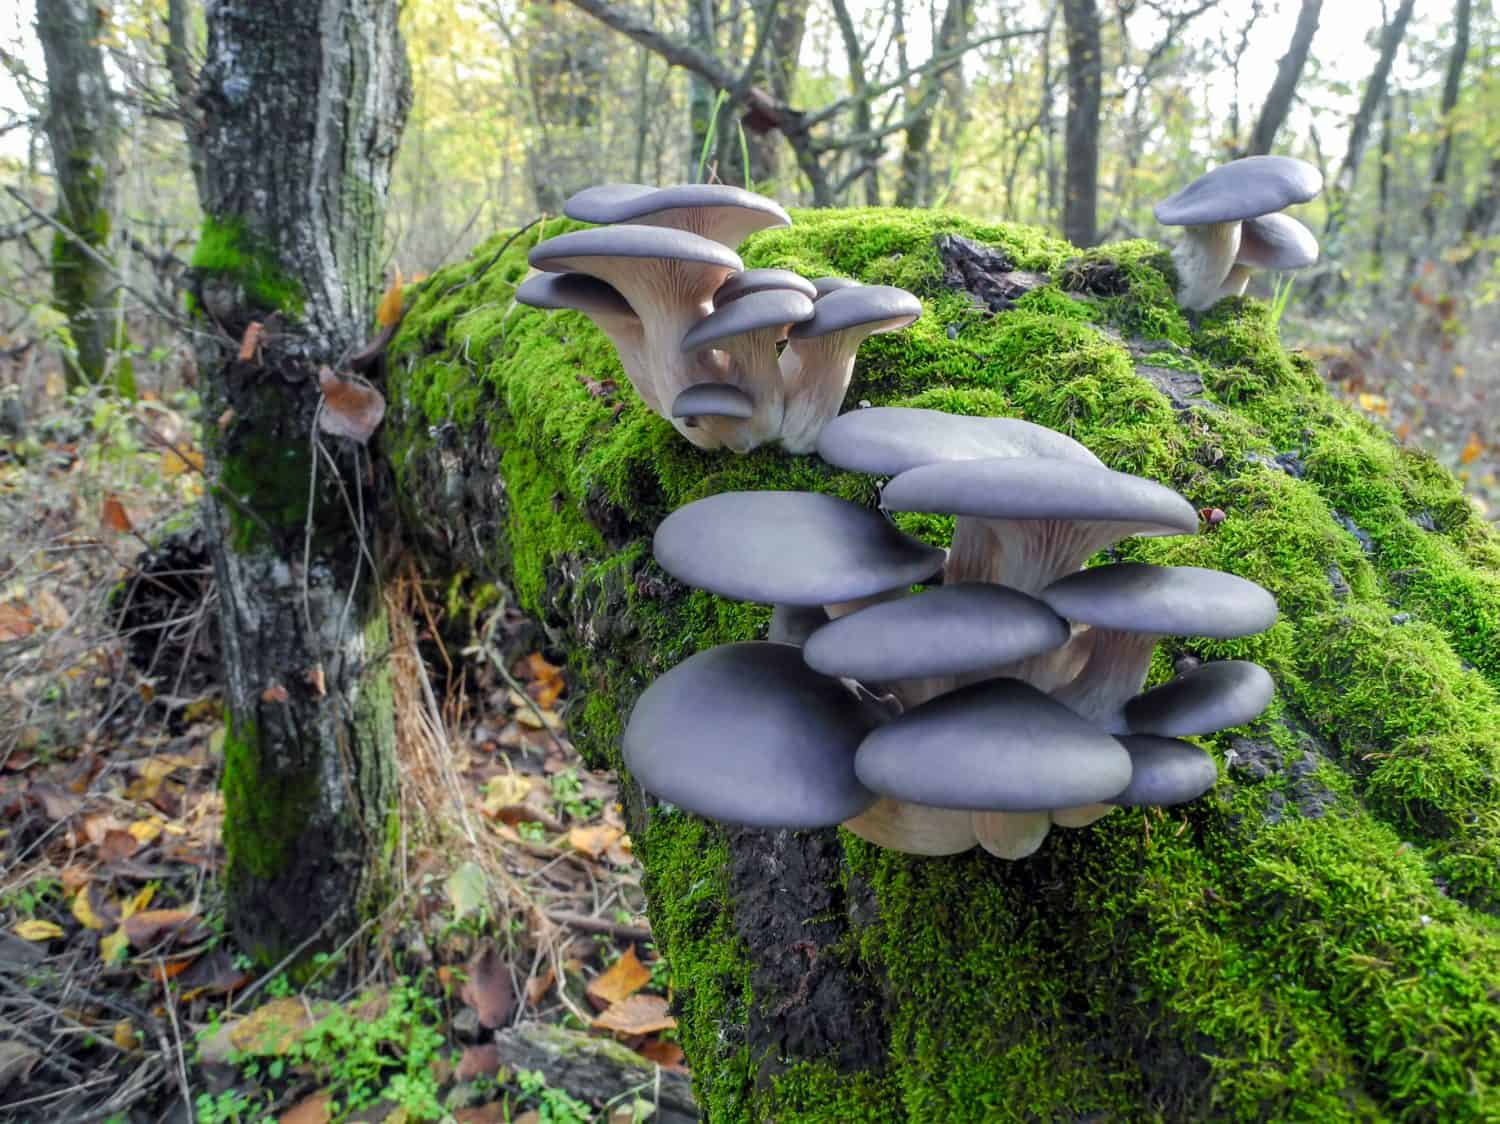 Blue hat of oyster mushrooms growing on green moss on a fallen tree